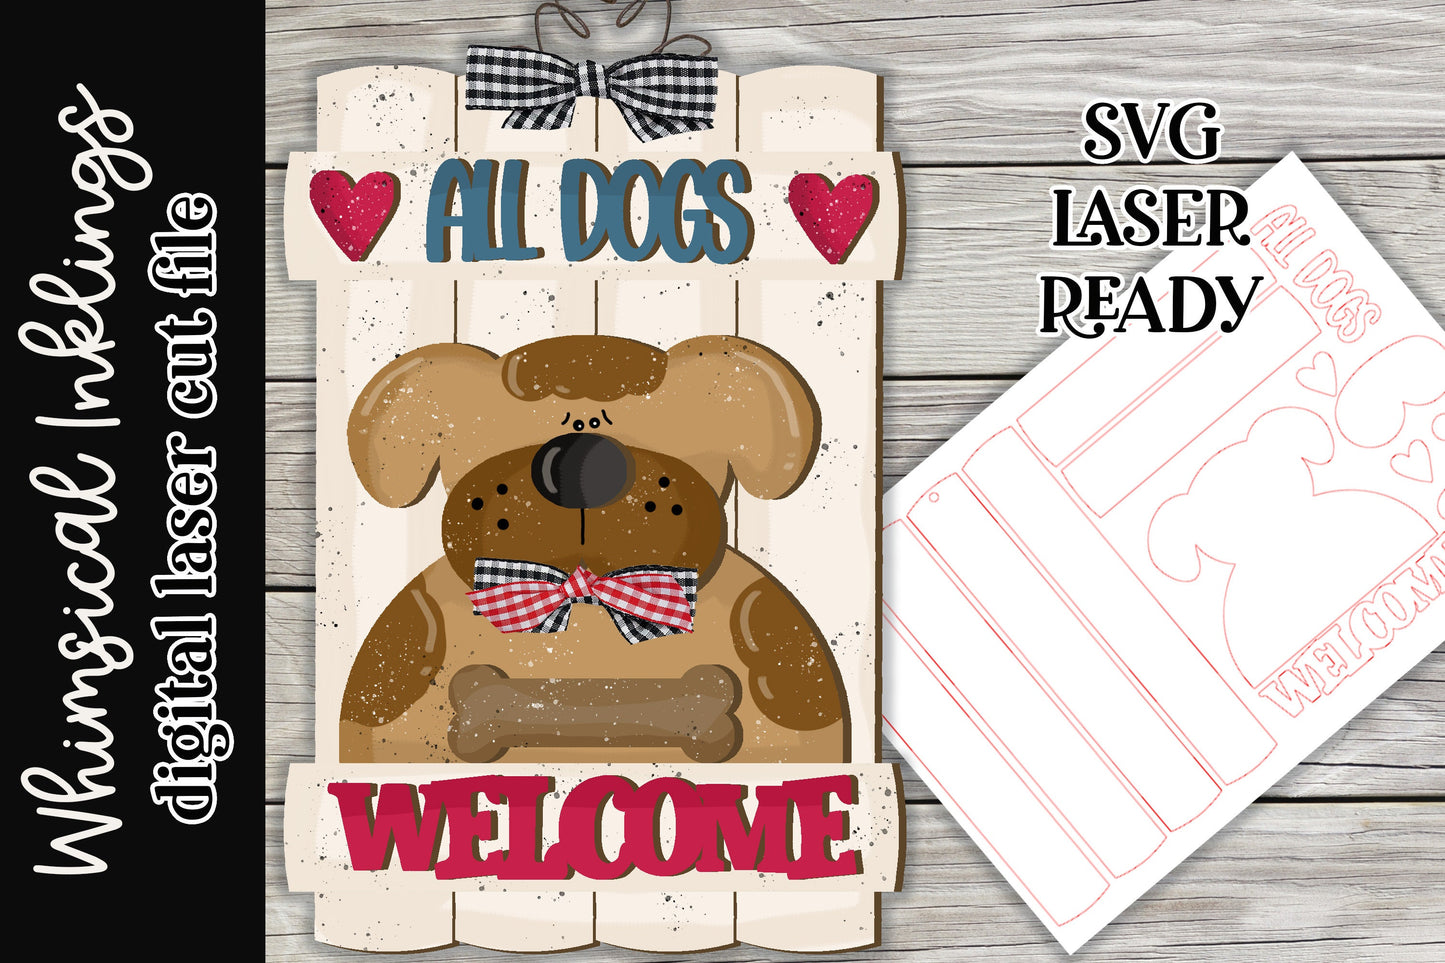 All Dogs Welcome SVG| Laser Cut Dog Sign| Glowforge| Dog Bone  Laser SVG| Dog Tiered Tray